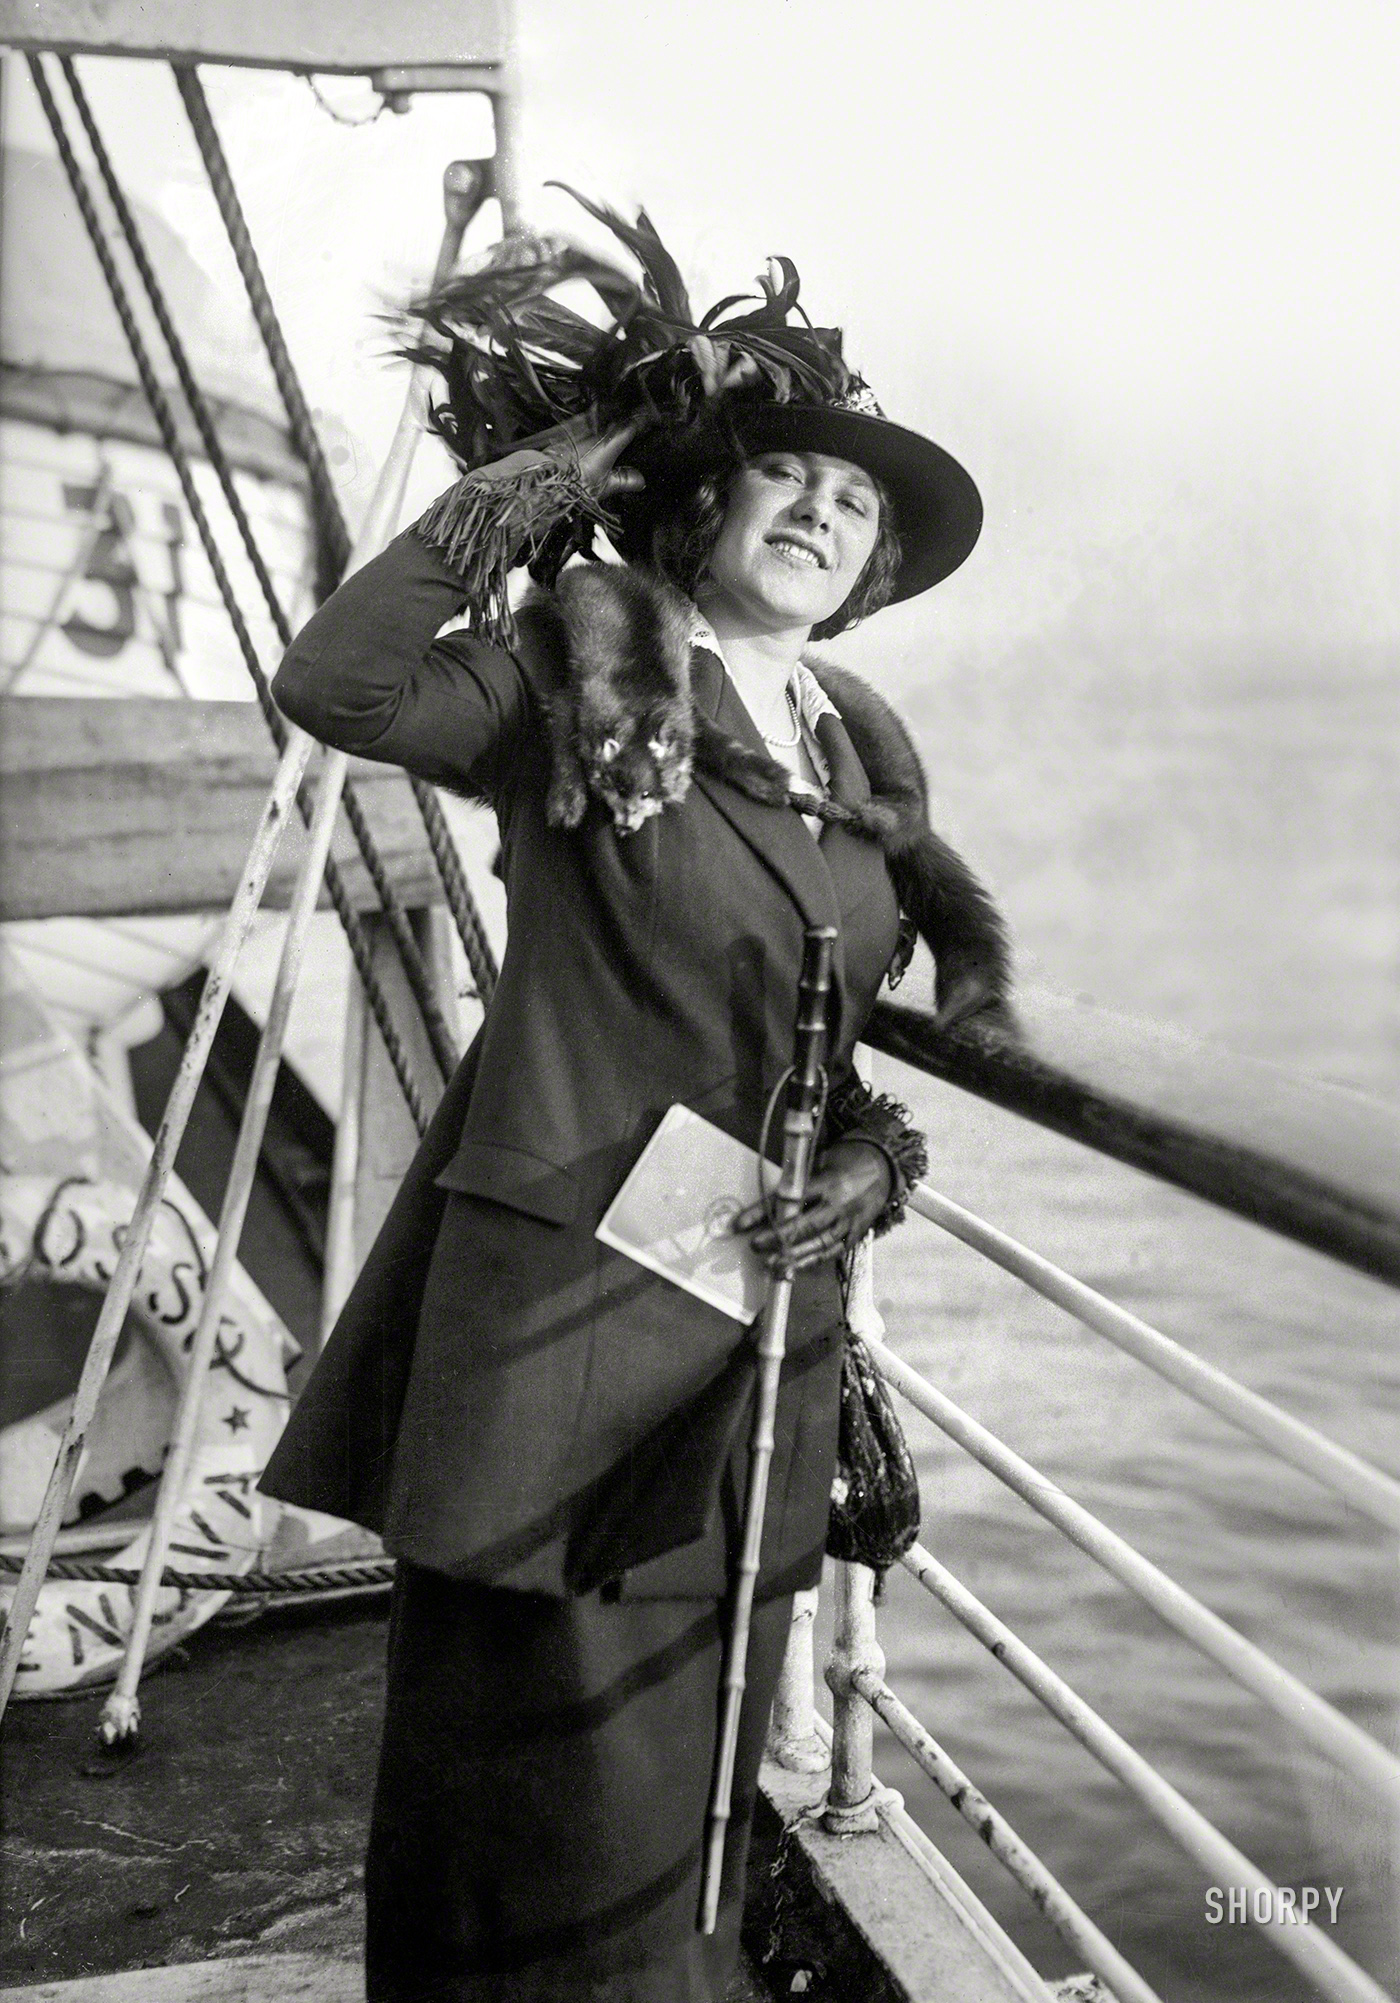 March 14, 1925. New York. "Isabella Fosta, soprano." And traveling companion. 5x7 glass negative, Bain News Service. View full size.